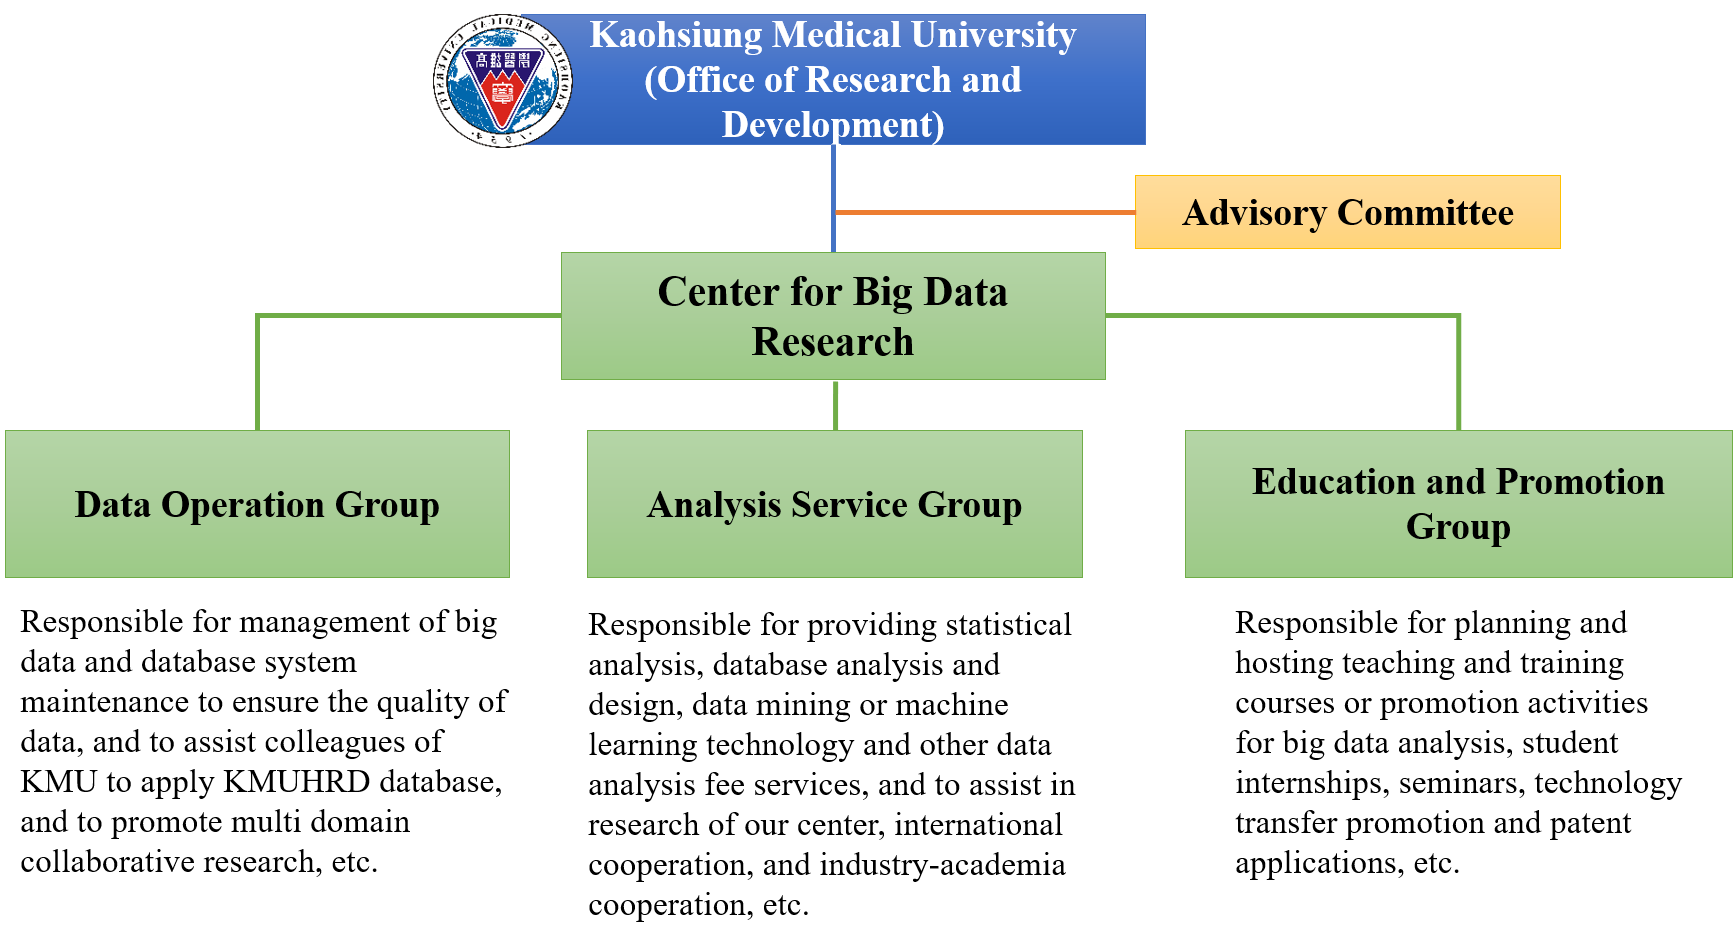 Organization Structure of Center